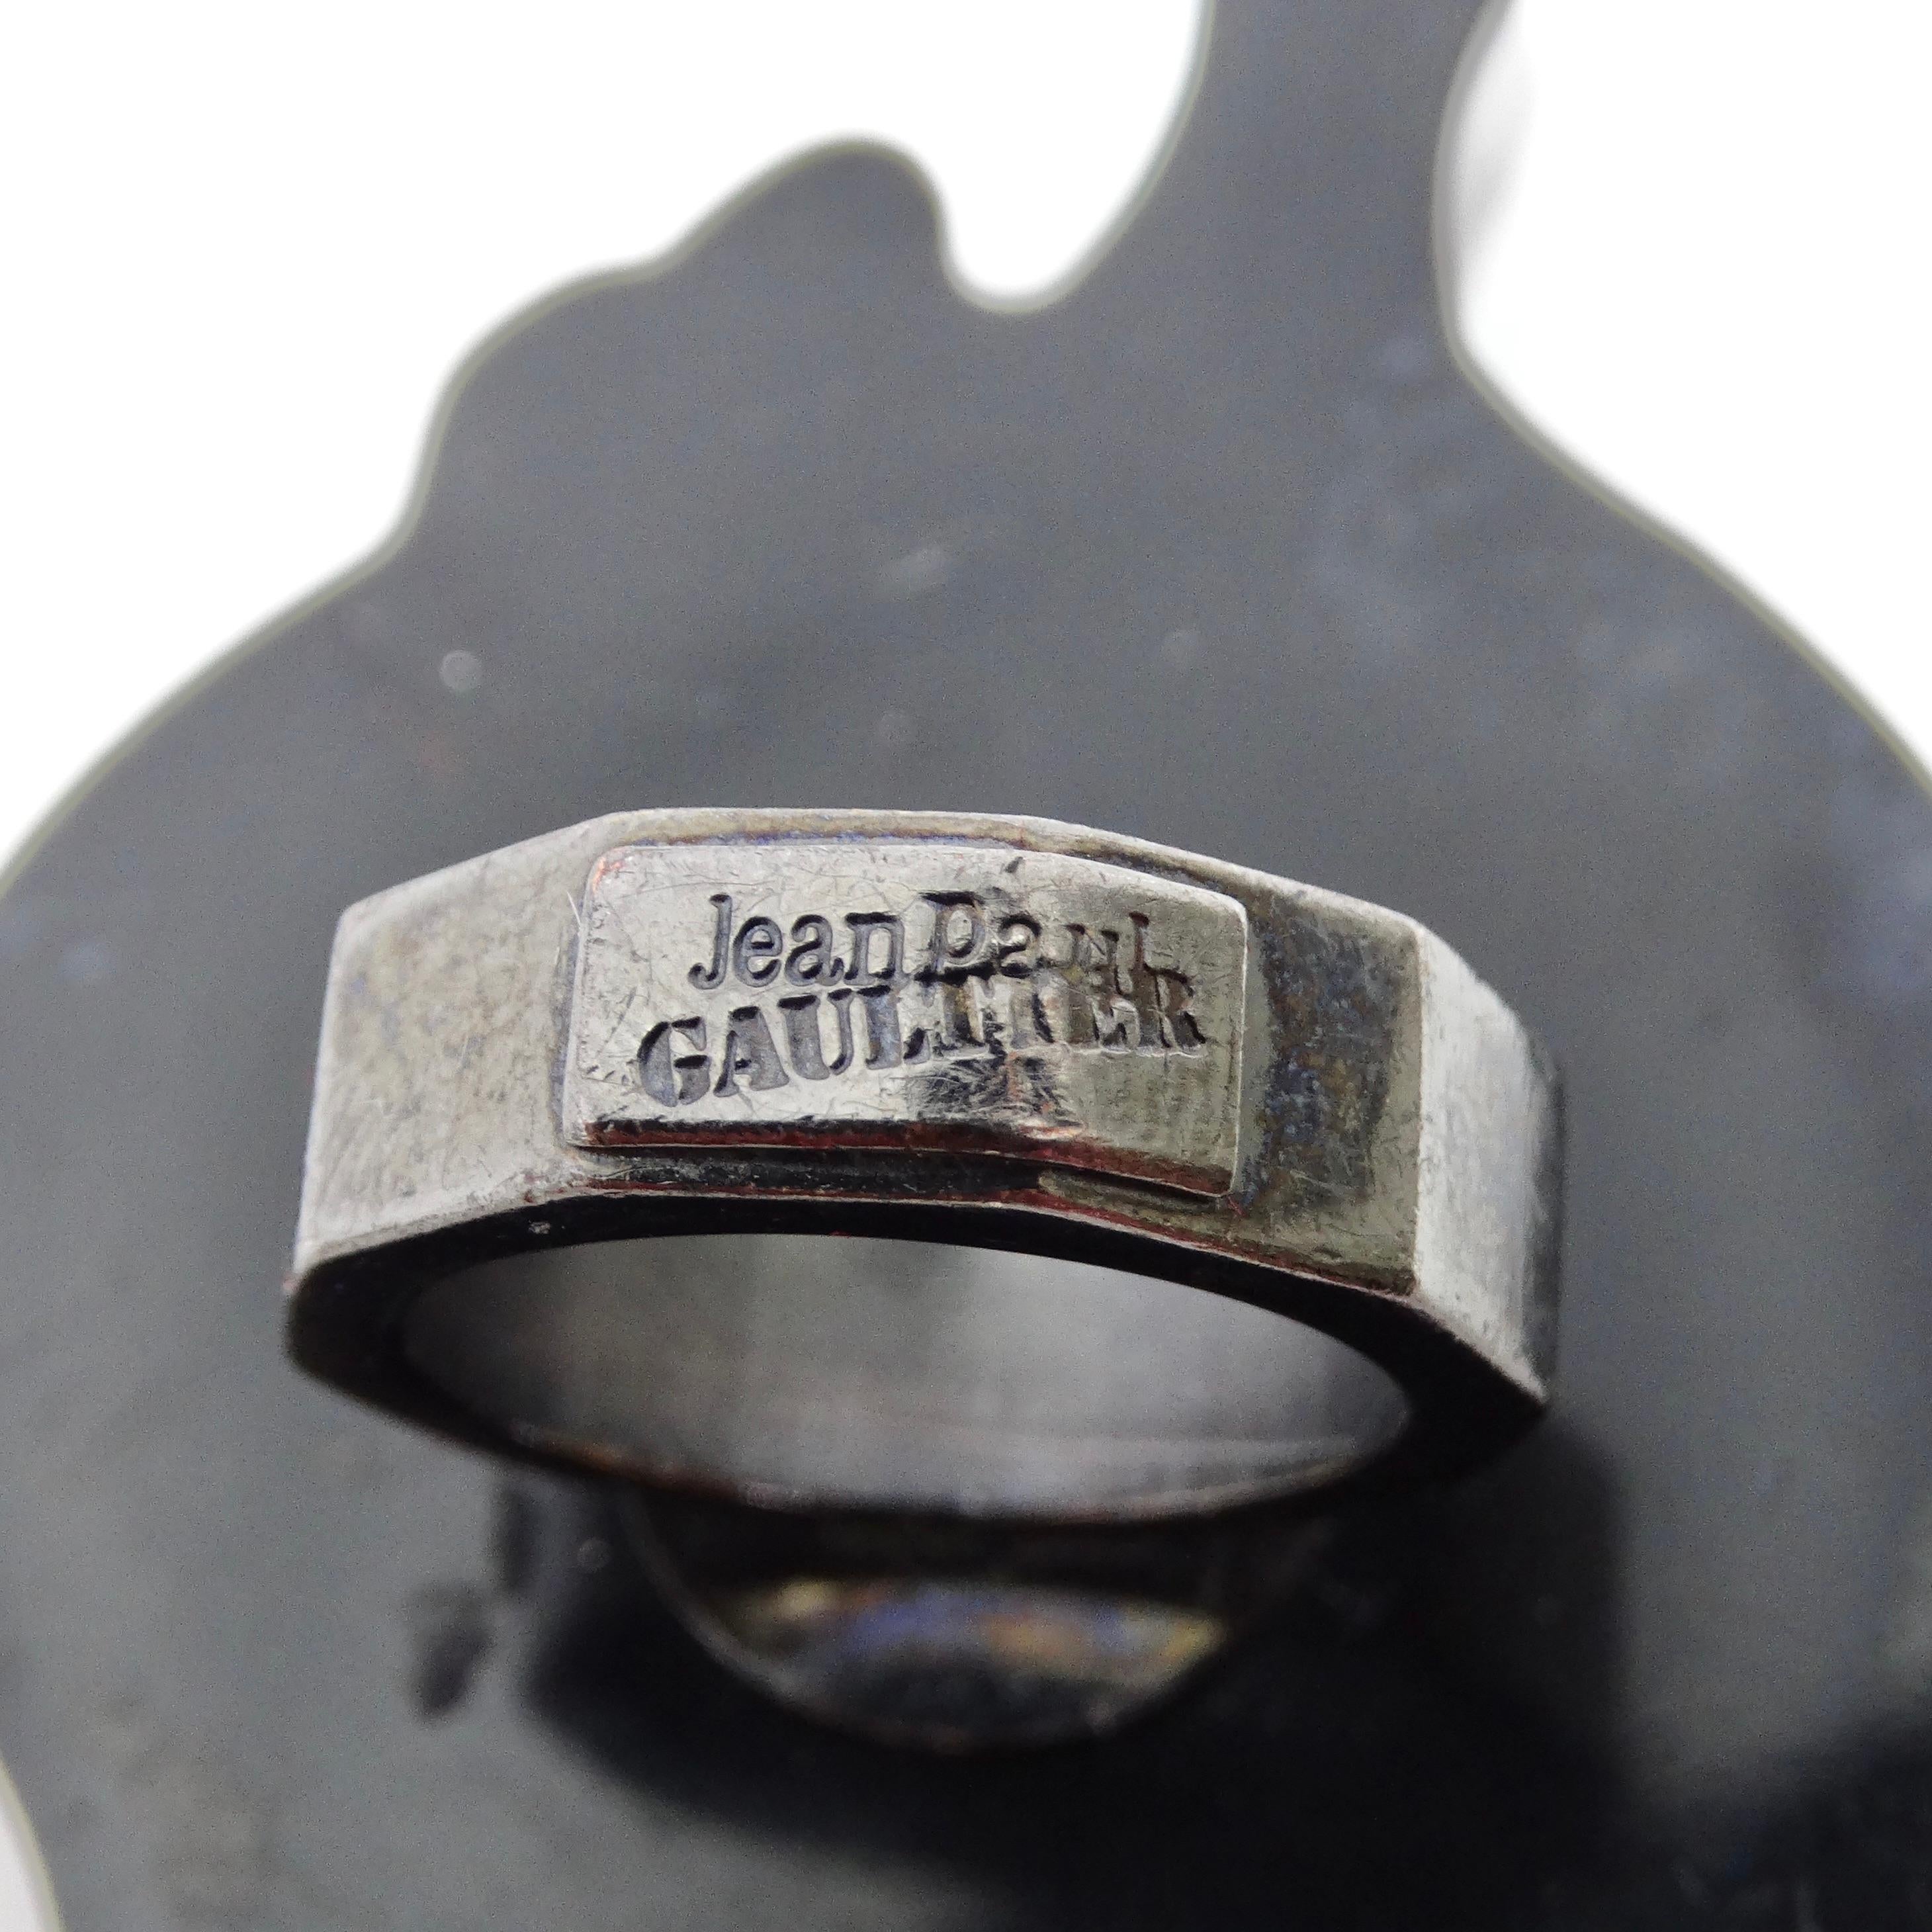 Jean Paul Gaultier Avant Garde Jumbo Statement Ring For Sale 4